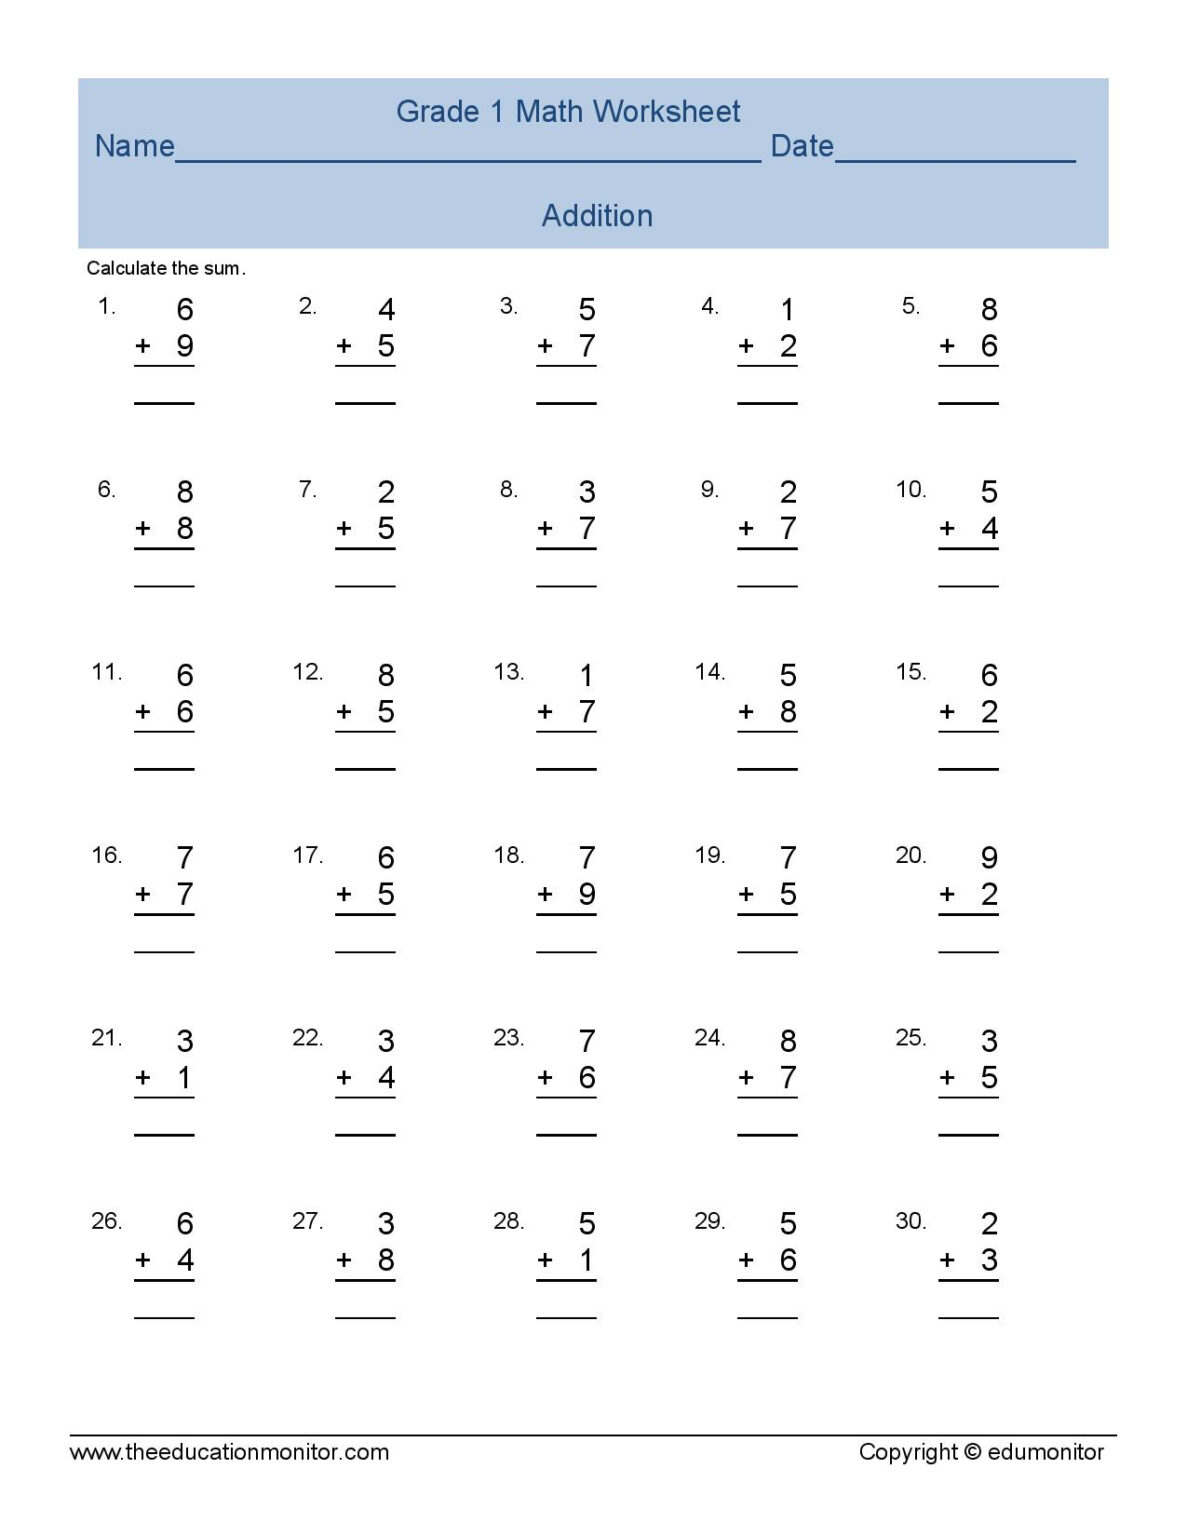 Free Printable Grade 1 Maths Worksheets South Africa Printable Worksheets